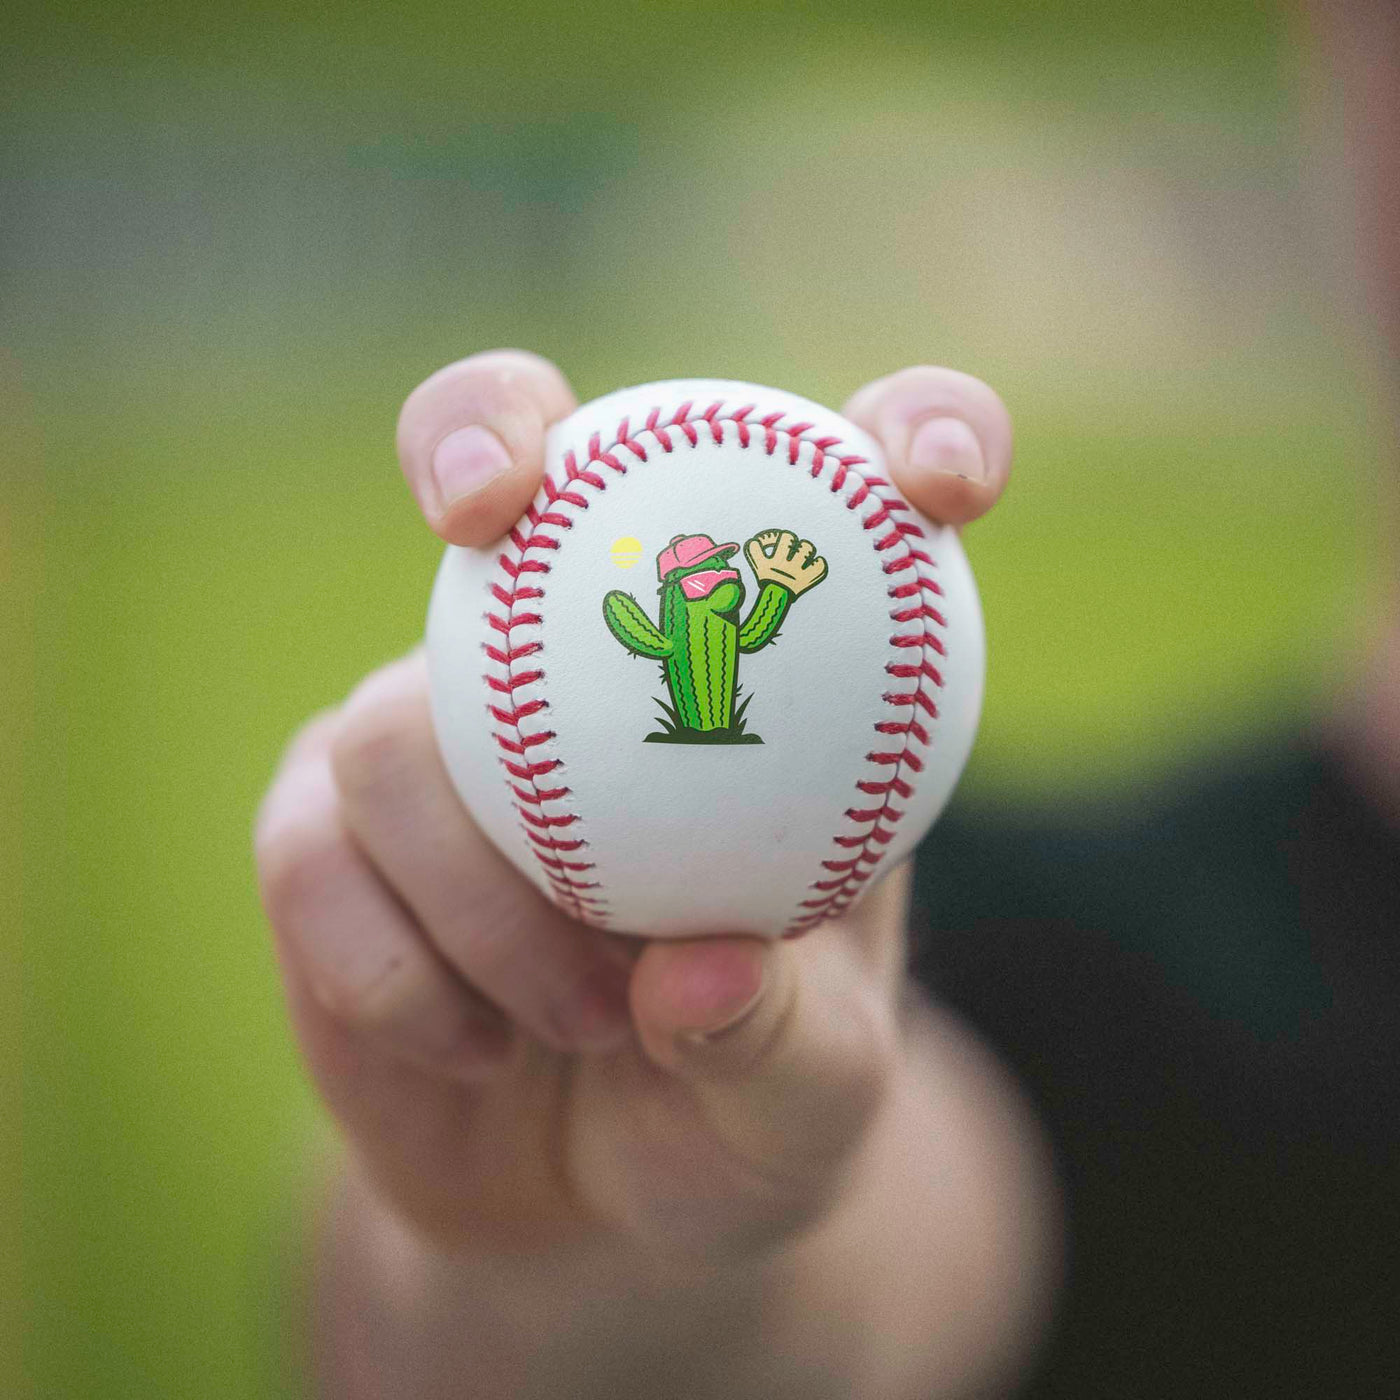 Fielding Cactus Baseball